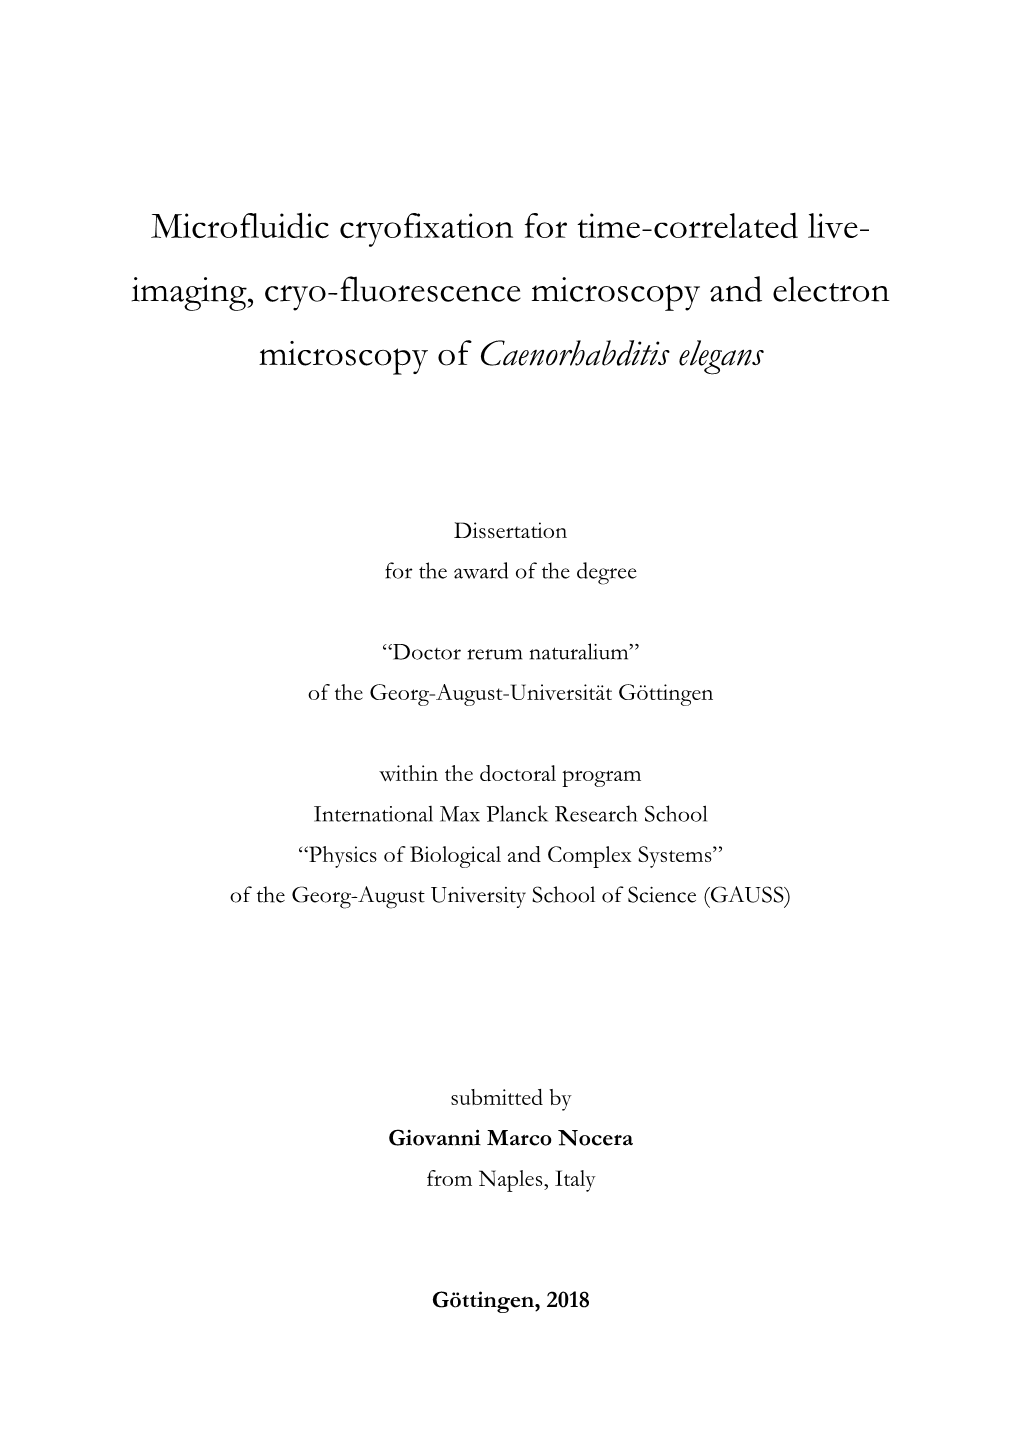 Microfluidic Cryofixation for Time-Correlated Live- Imaging, Cryo-Fluorescence Microscopy and Electron Microscopy of Caenorhabditis Elegans